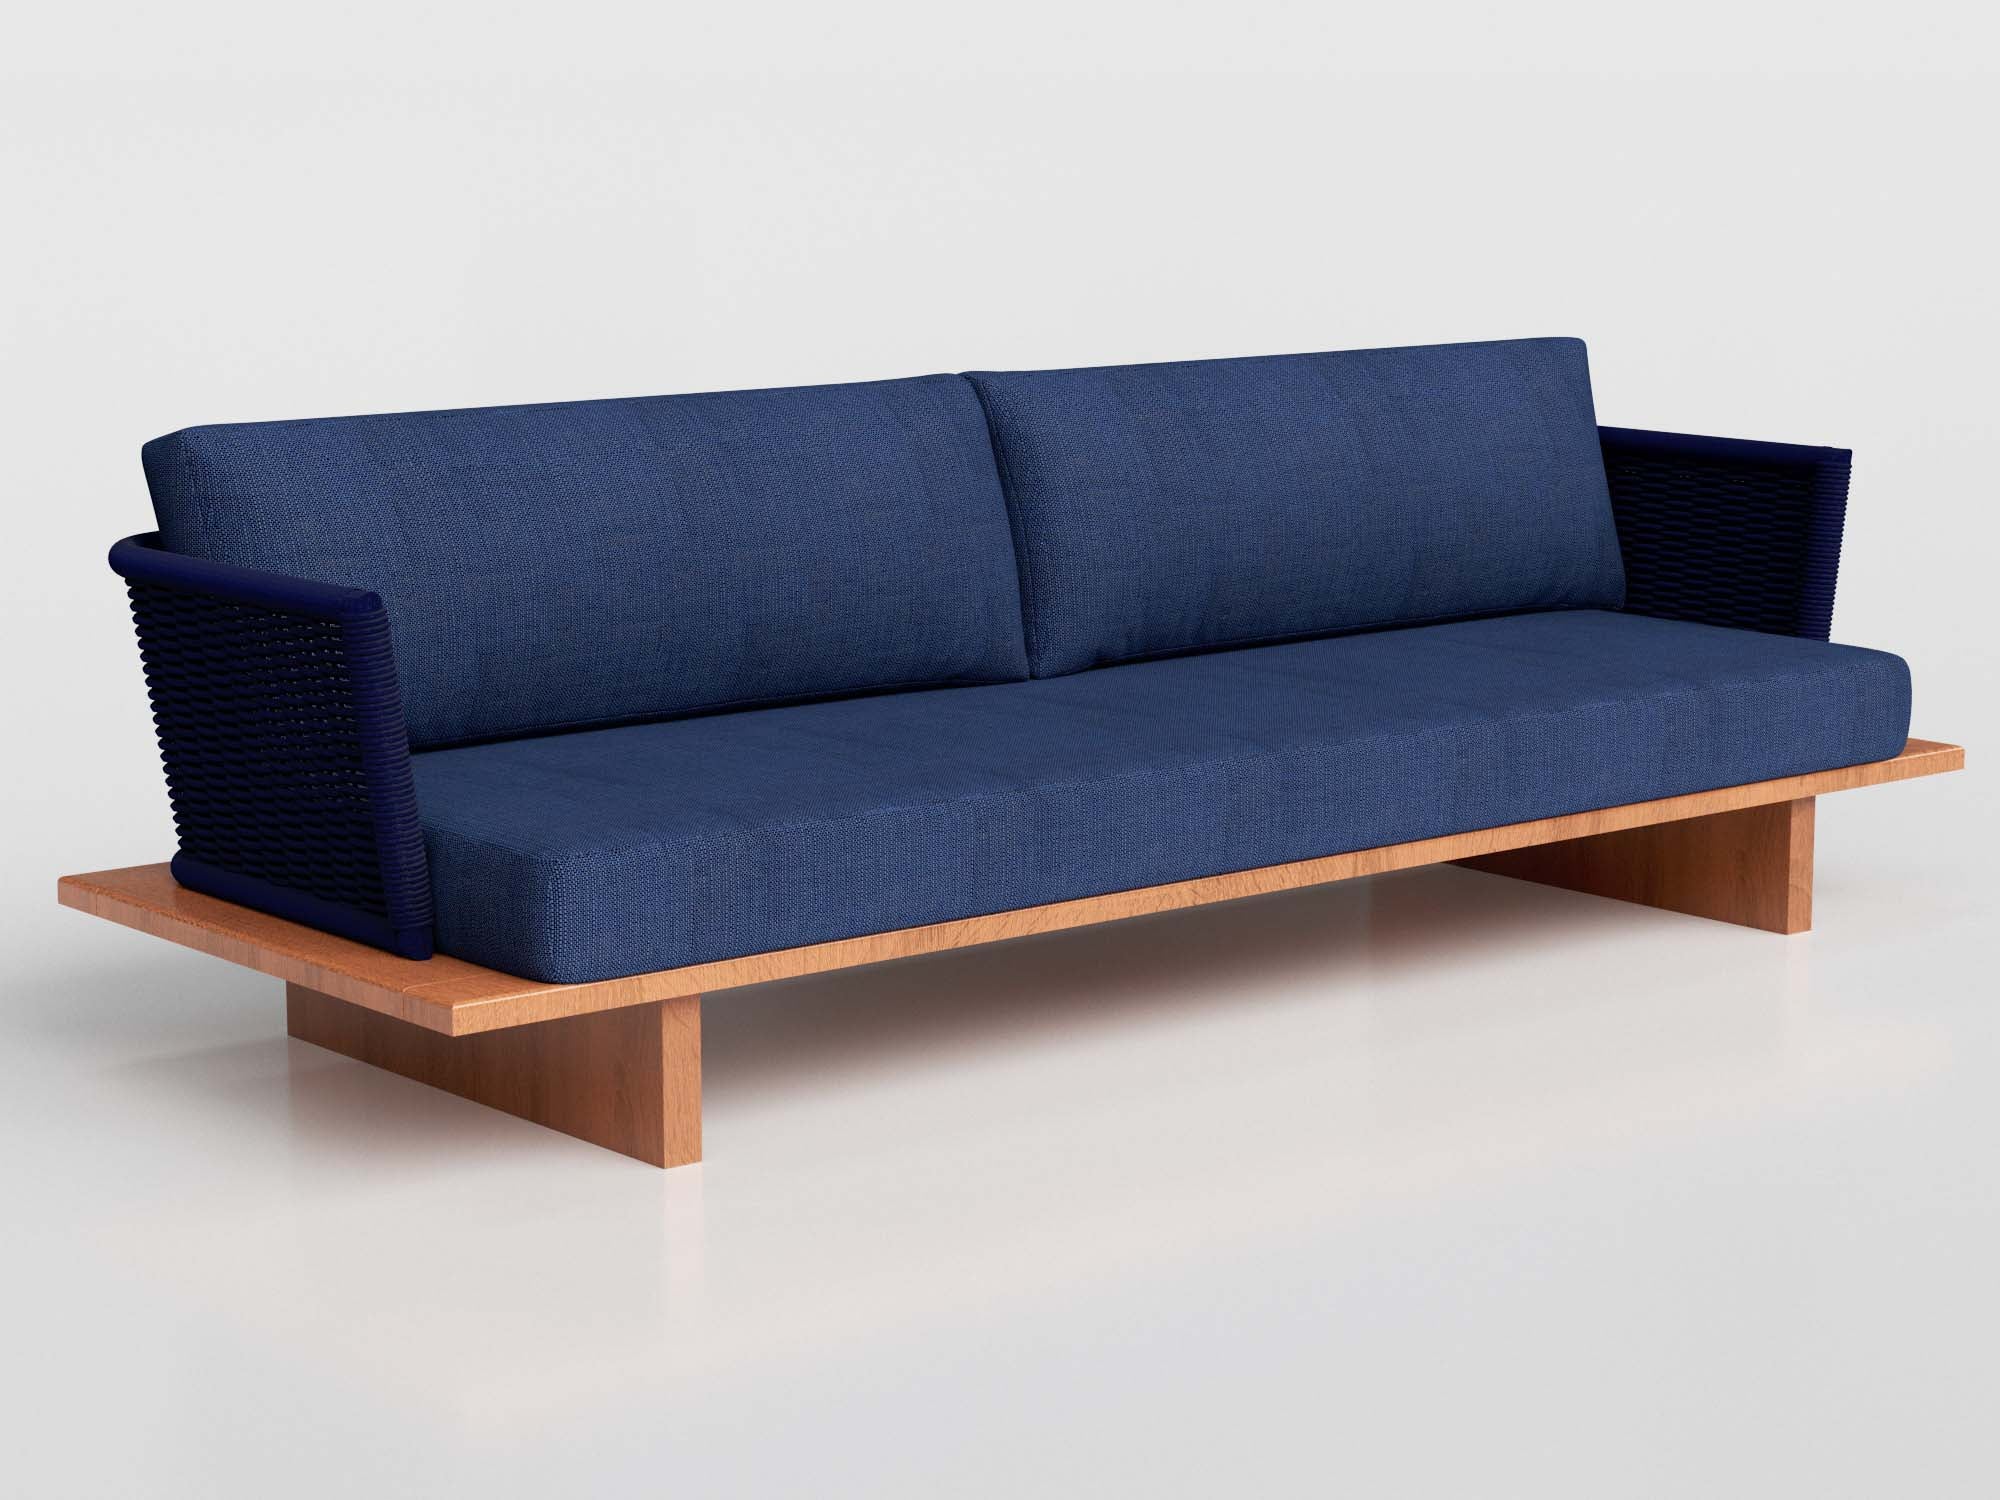 Fusion Sofa in nautical rope and wood estruture, designed by Maria Candida Machado